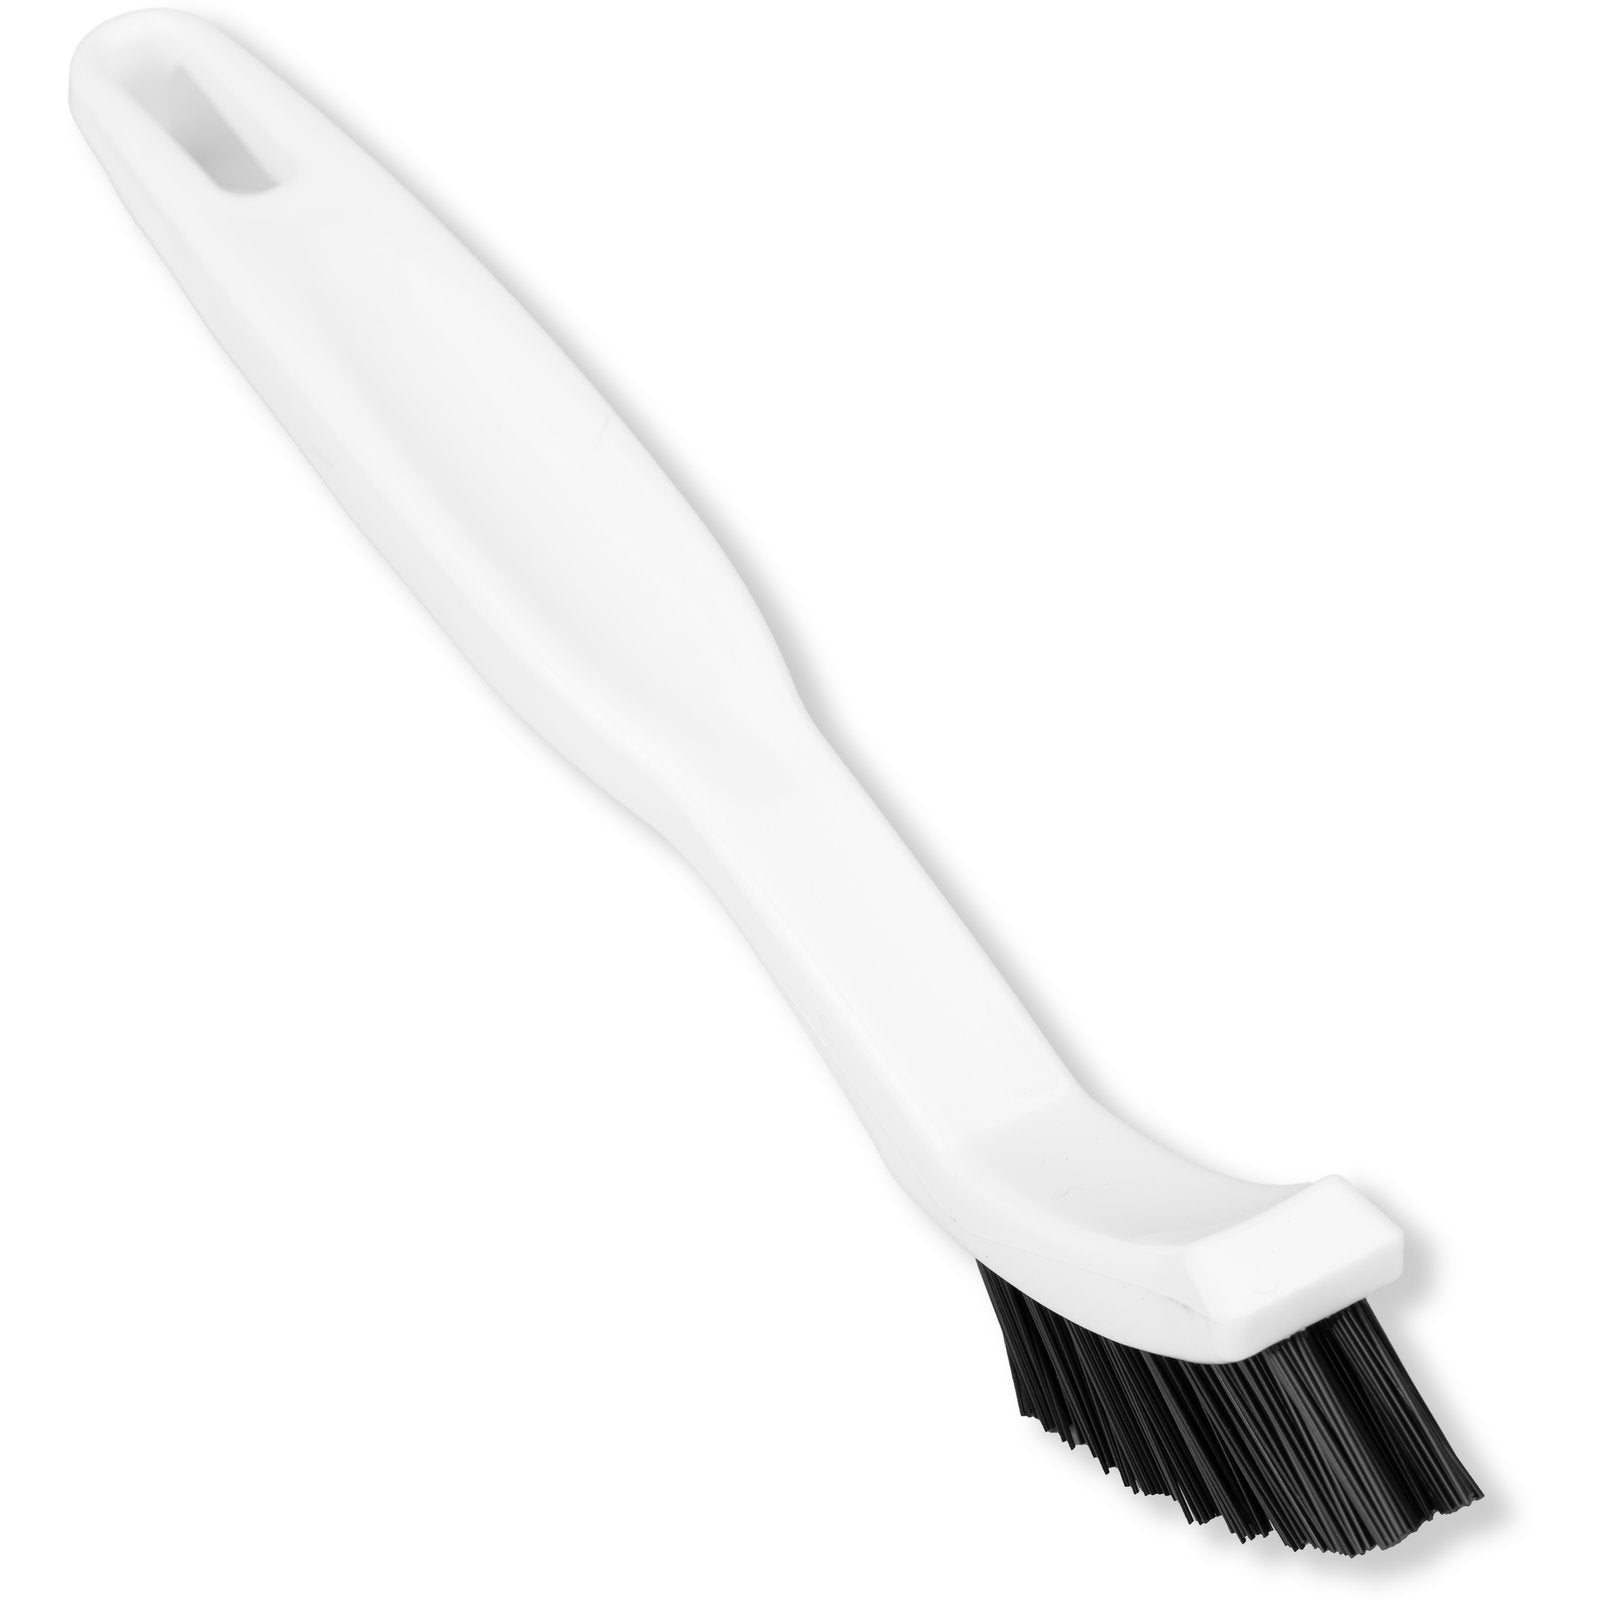 Carlisle White Plastic Scrub Brush With Blue Bristles - 8L